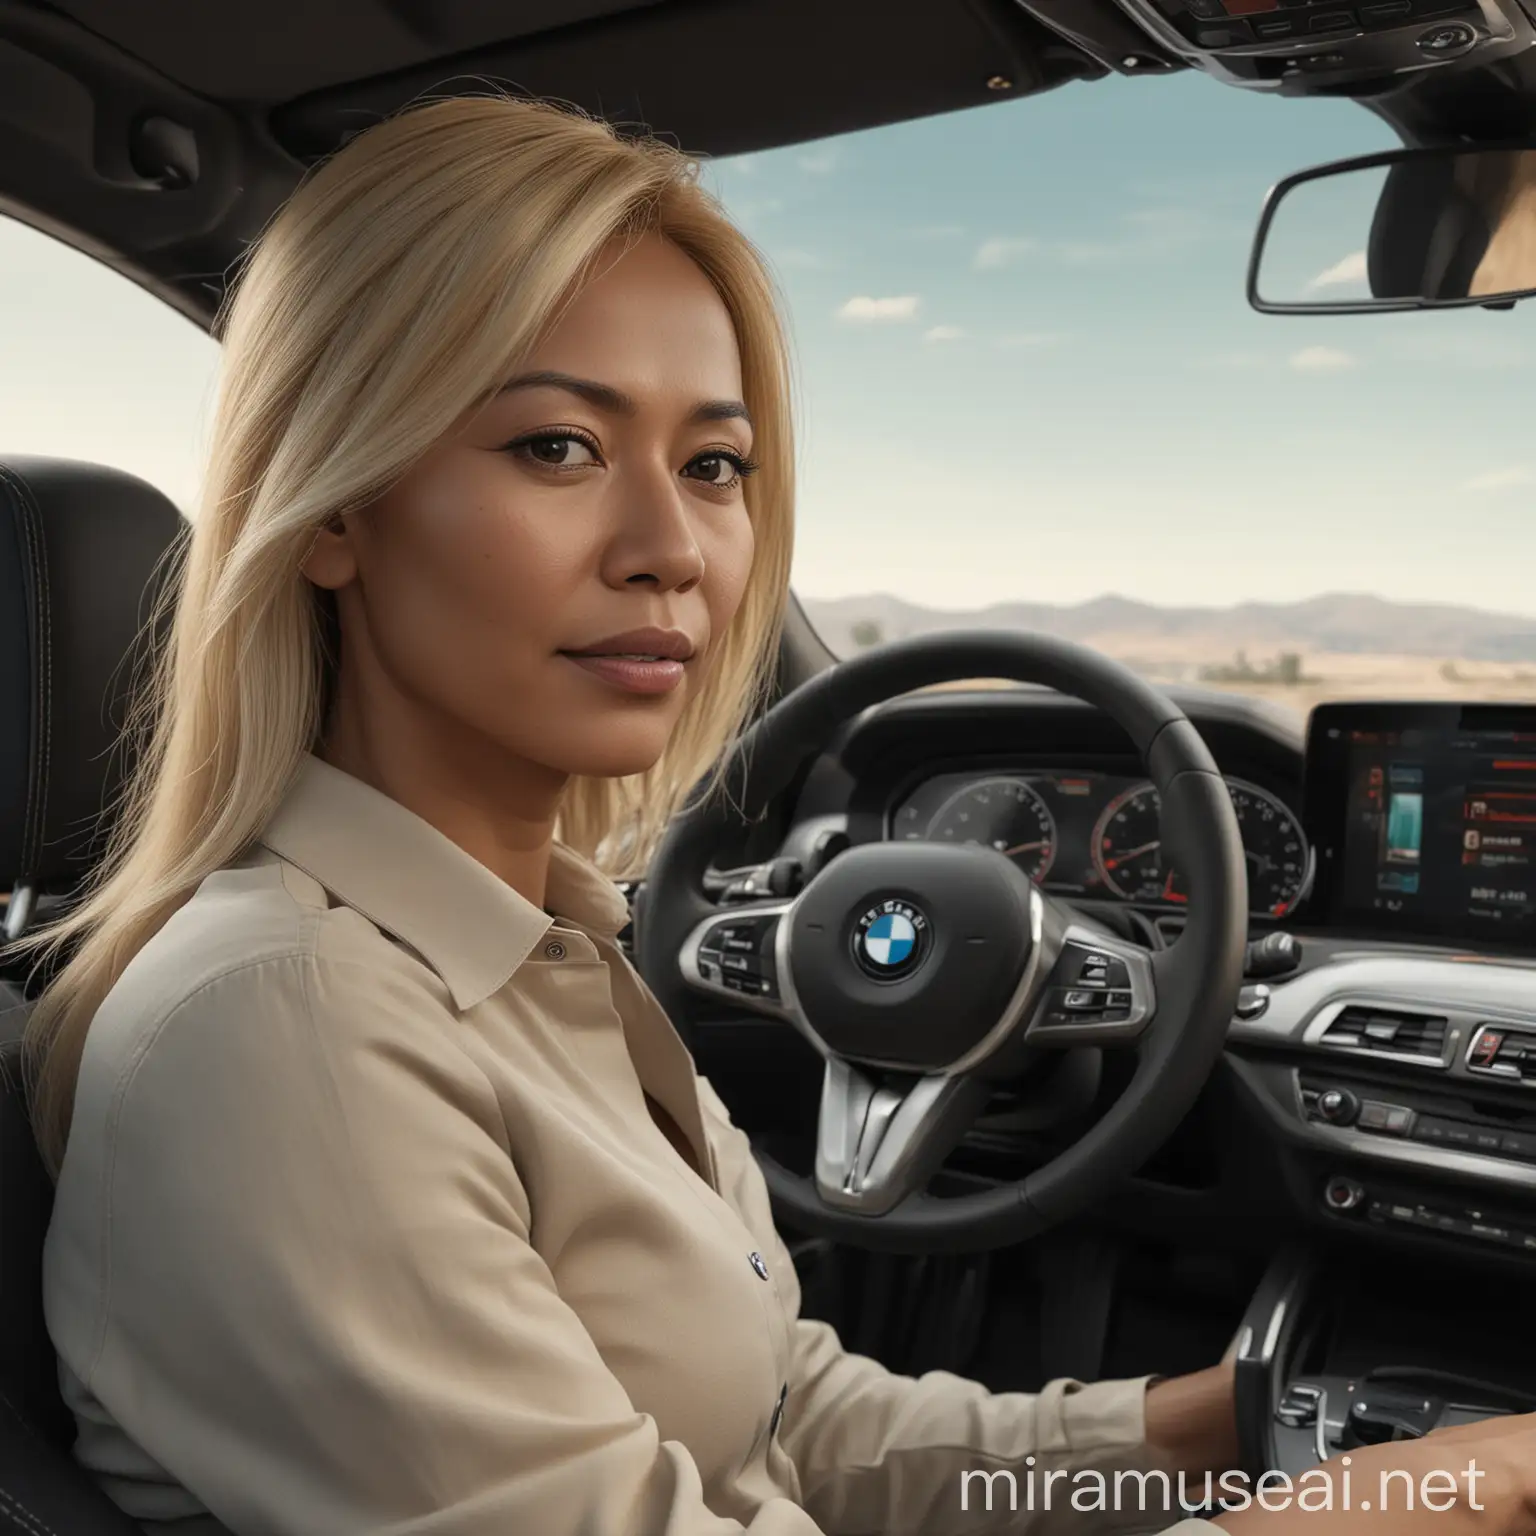 Elegant 50YearOld Indonesian Woman in Luxurious BMW Sports Car